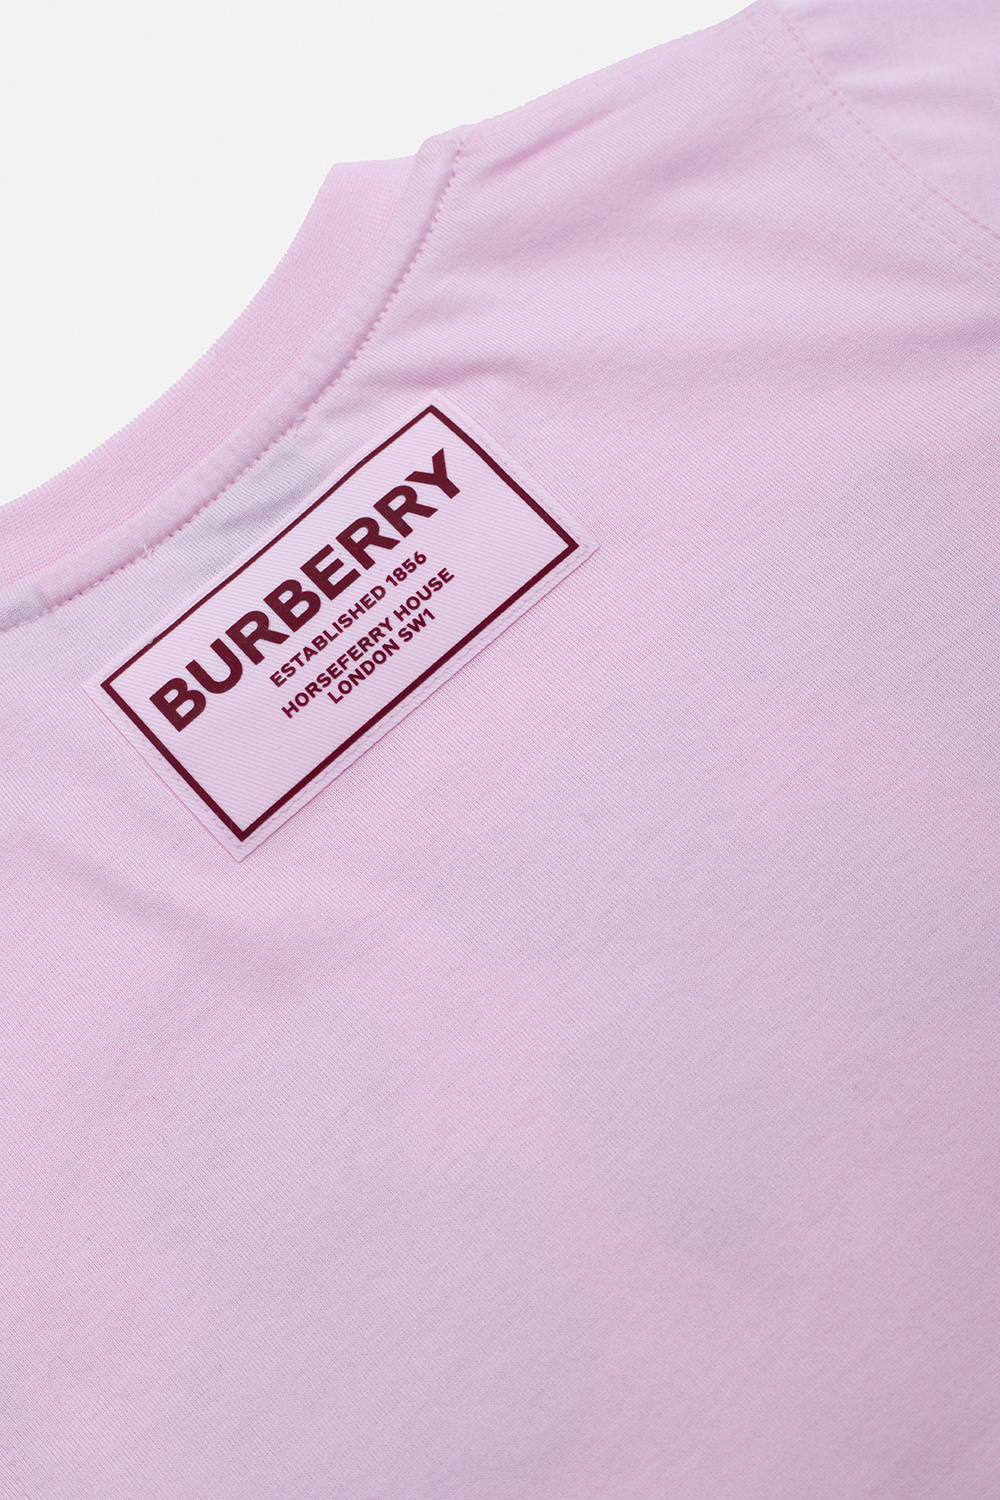 Burberry Kids burberry letter graphic check print shirt item